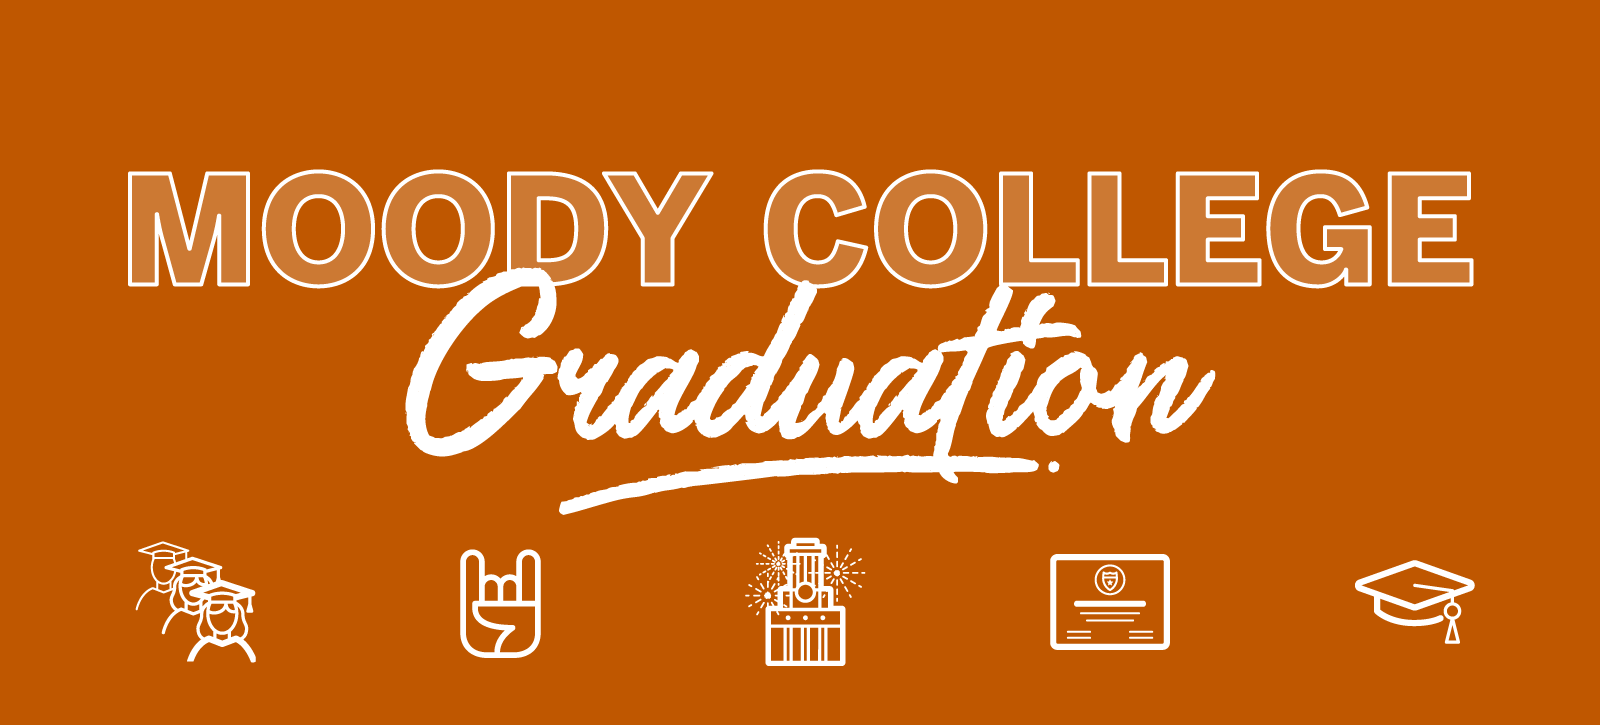 Moody College Graduation Ceremony Moody Events Calendar